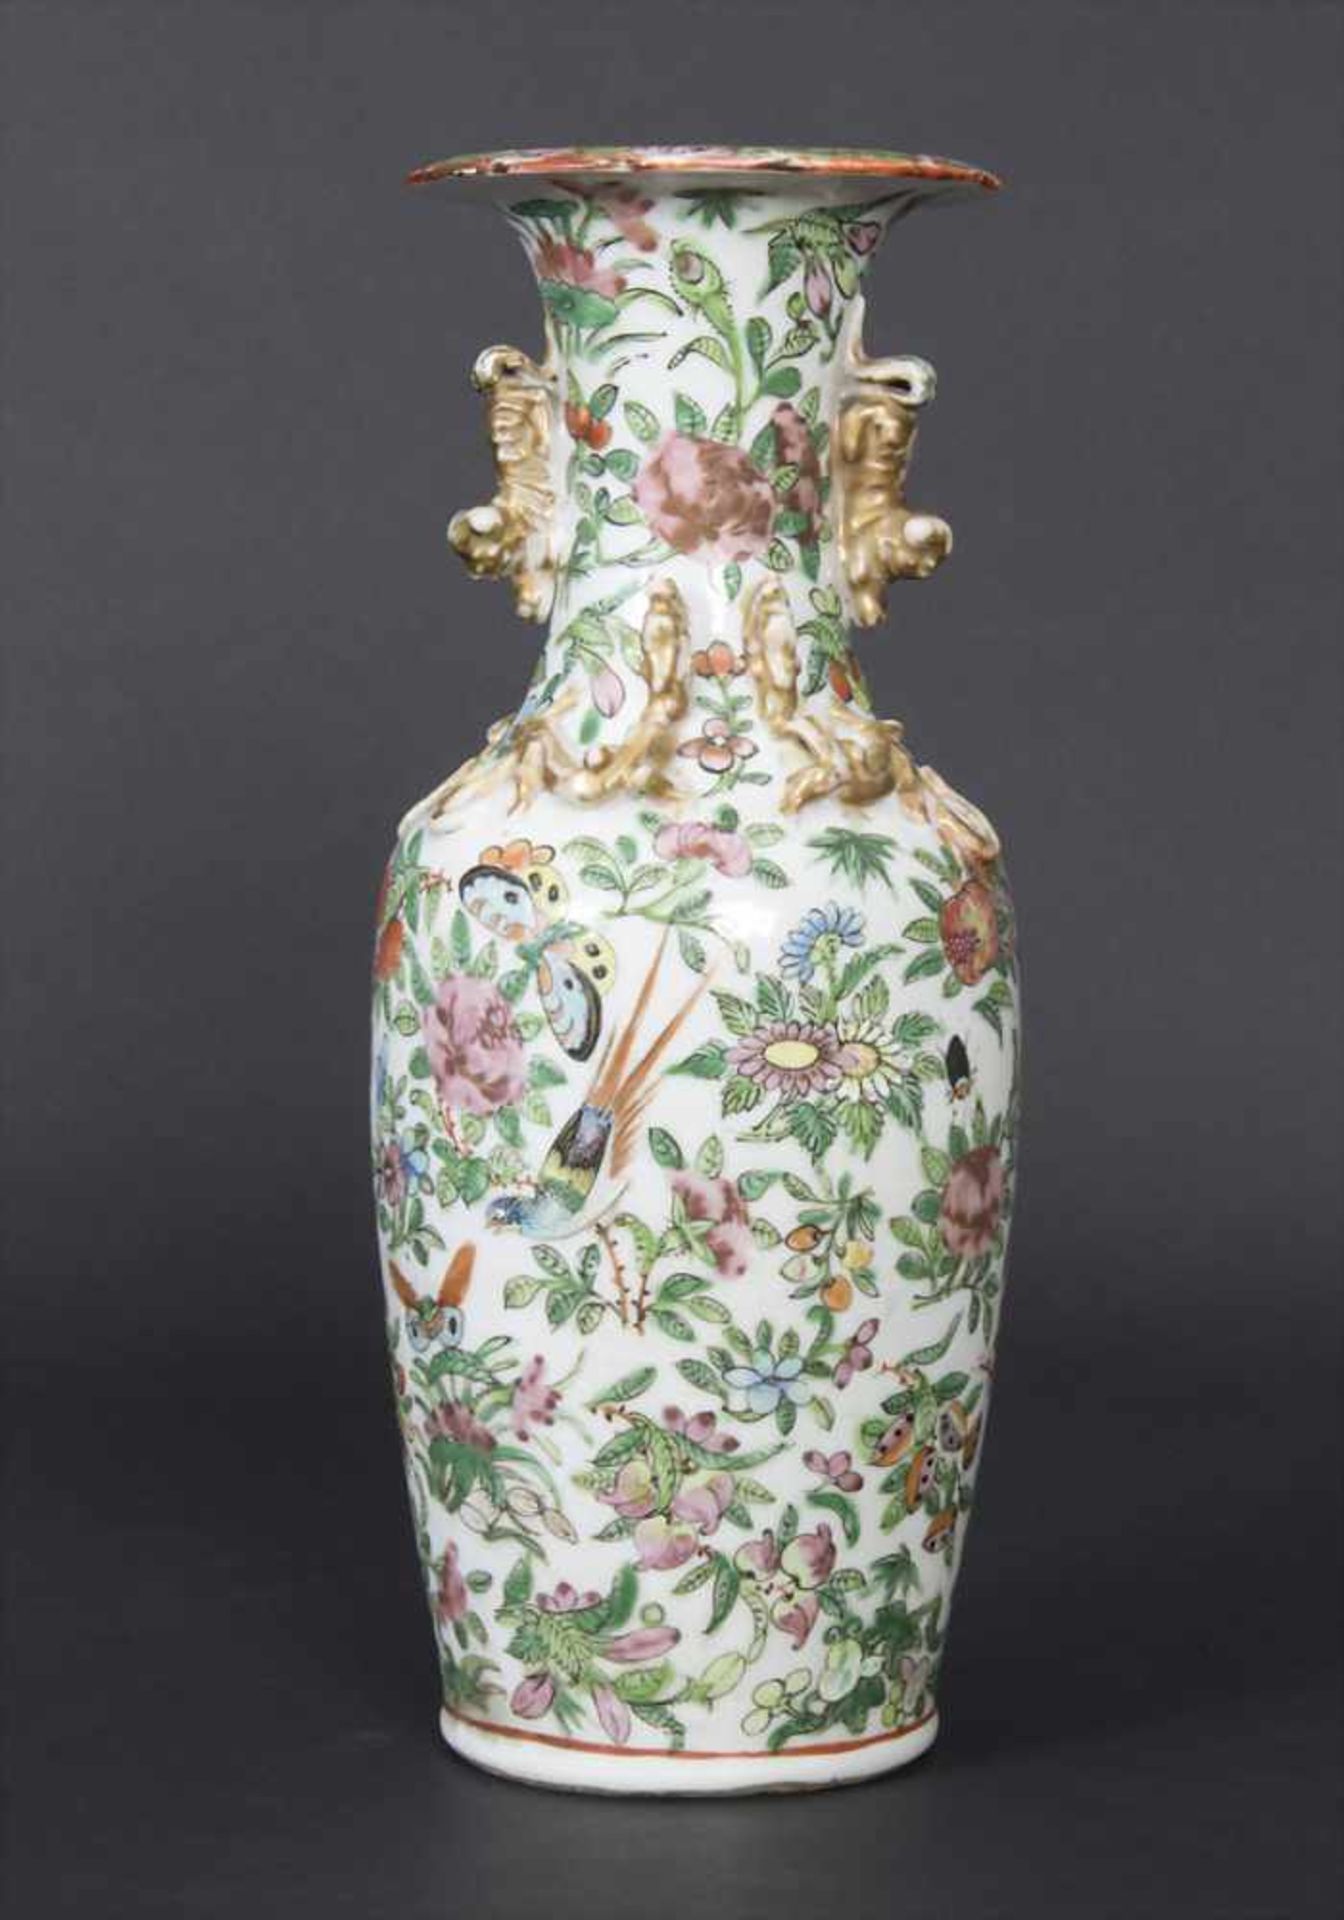 Kantonvase 'Familie Rose Dekor', China um 1900Material: Porzellan polychrome bemalt mit Blüten und - Image 3 of 7